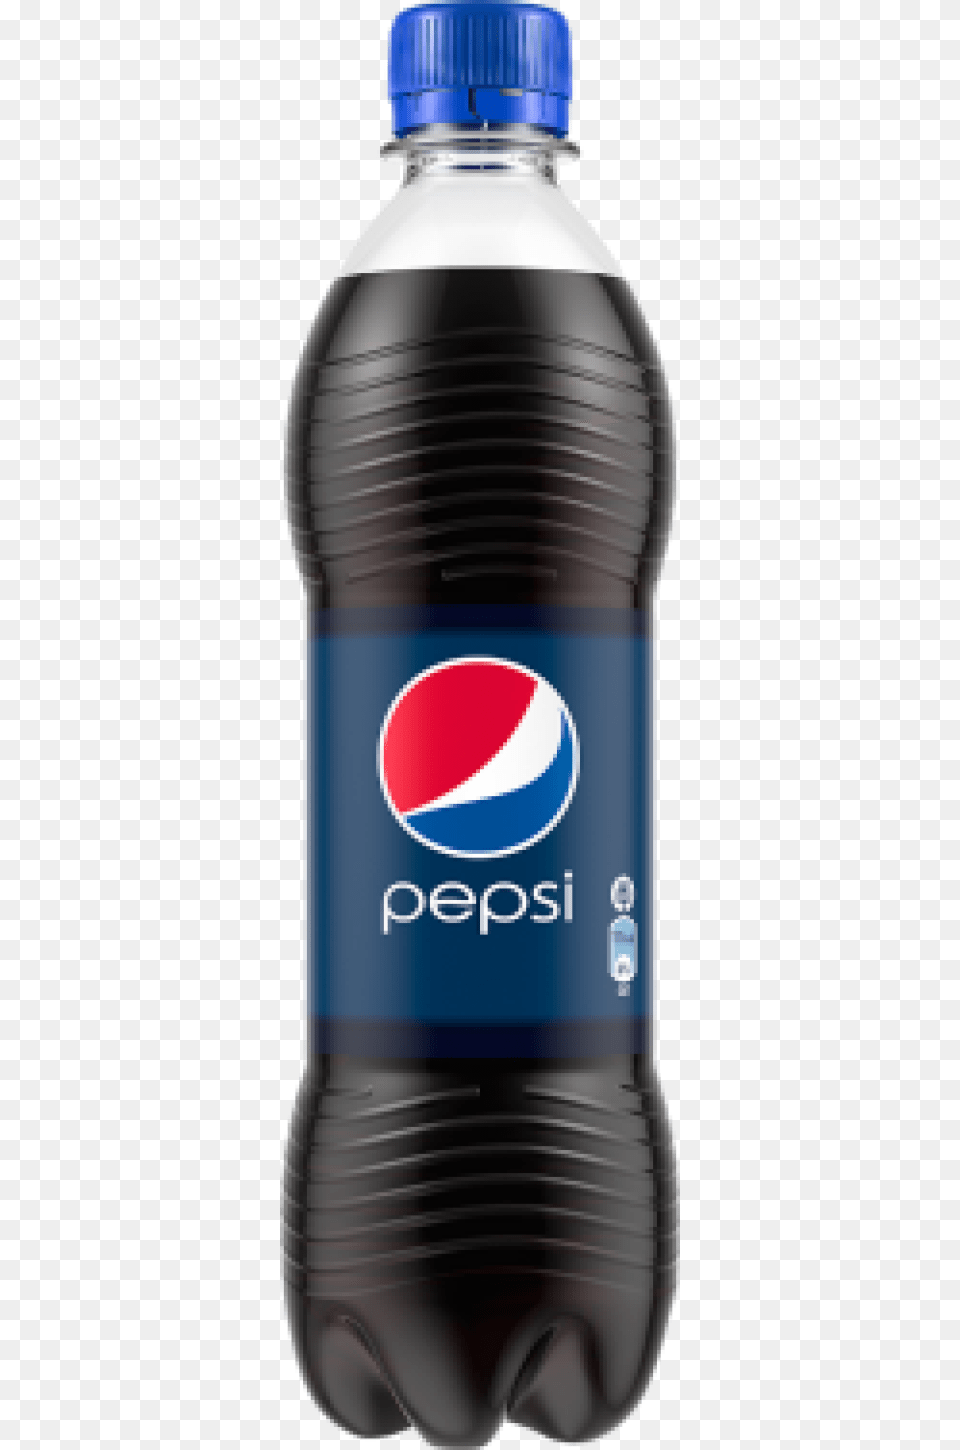 Background Pepsi Bottle Transparentquottitlequotbackground Pepsi, Beverage, Soda, Shaker, Pop Bottle Png